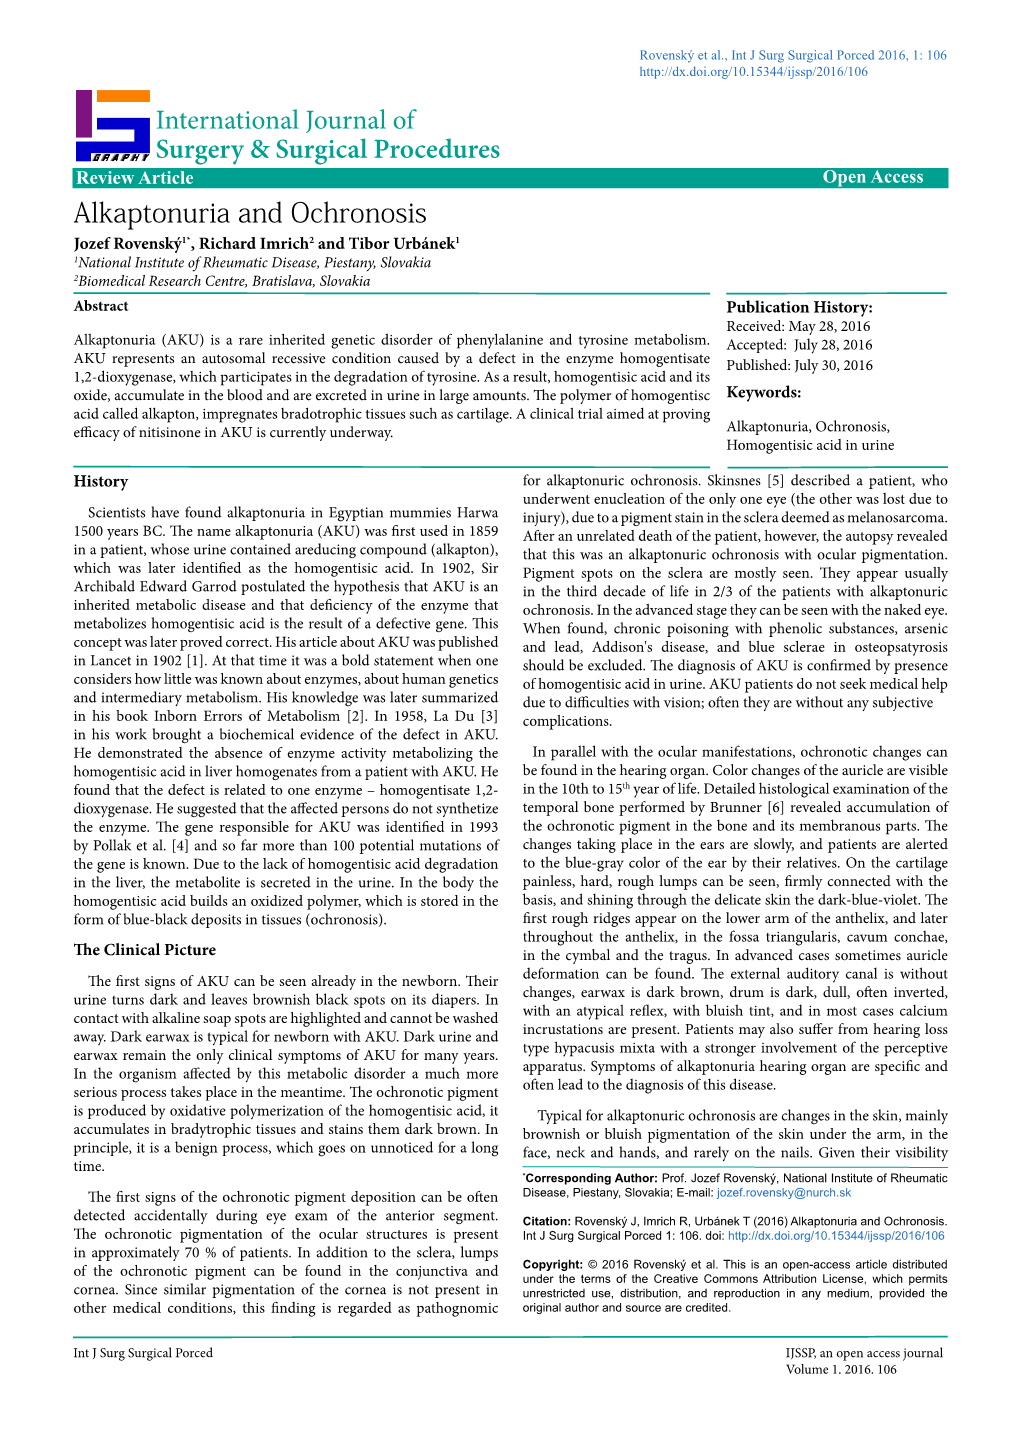 Alkaptonuria and Ochronosis International Journal of Surgery